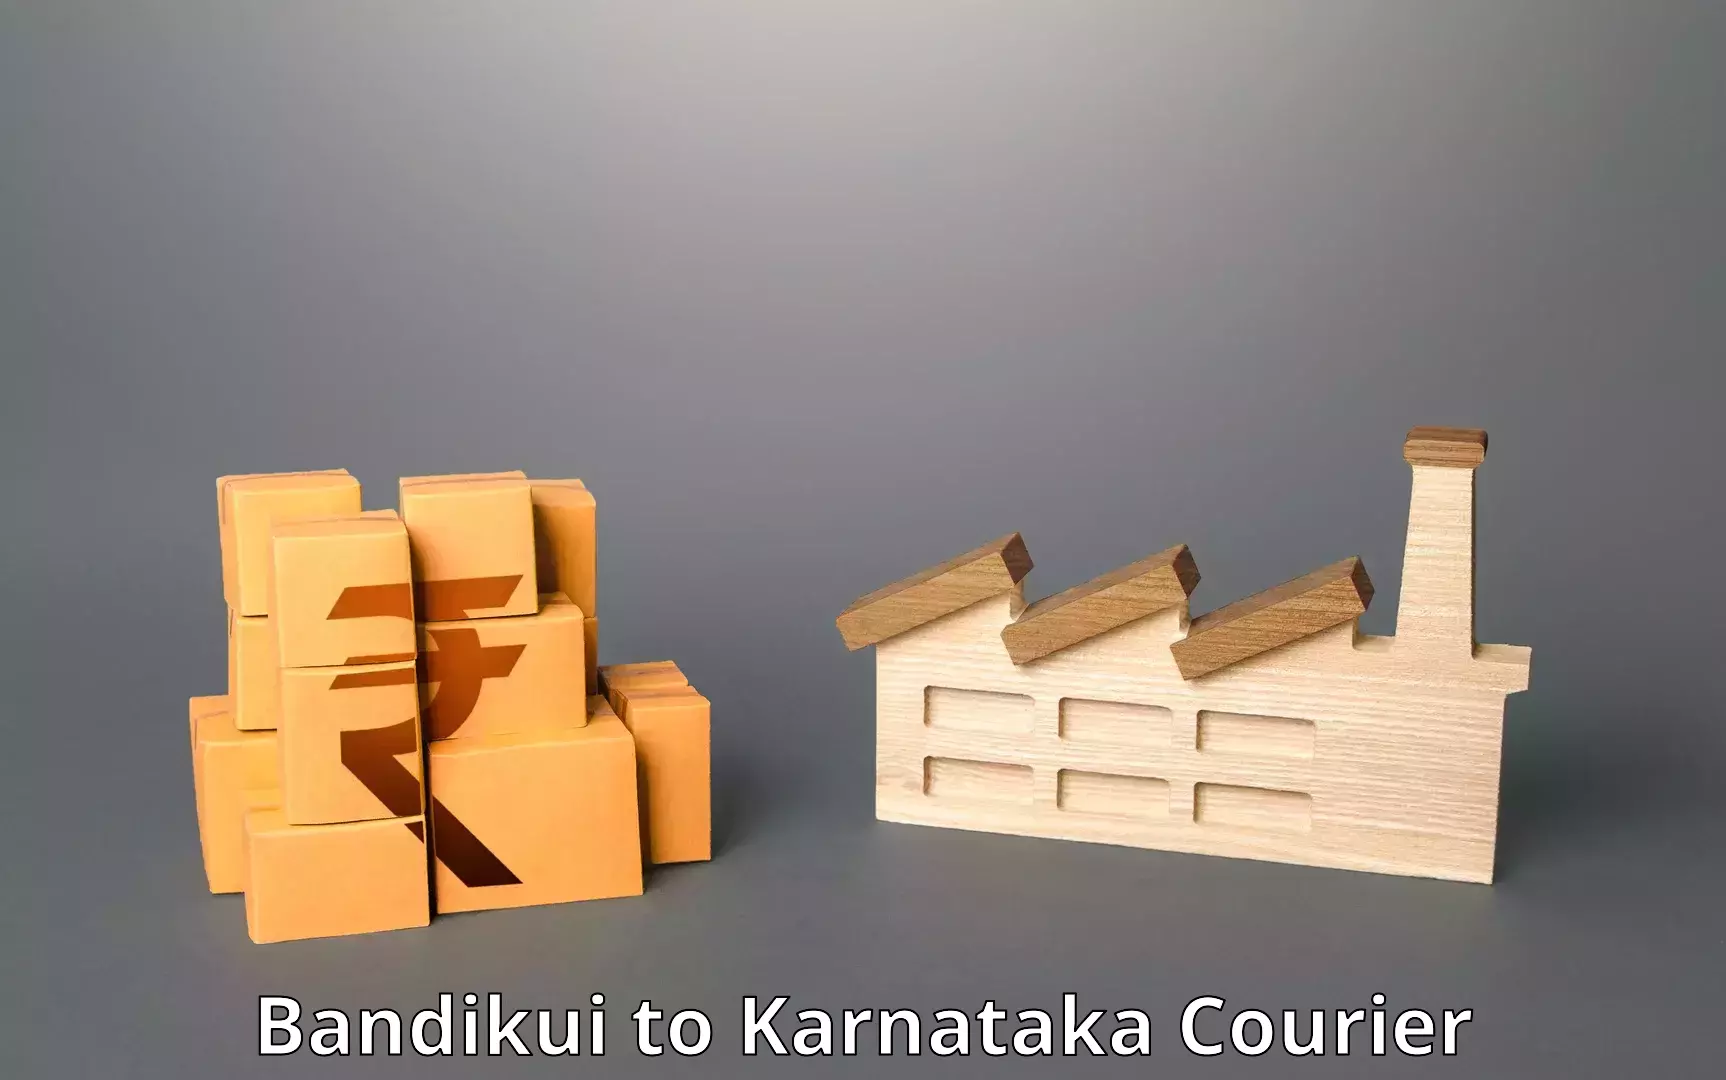 Local delivery service Bandikui to Karnataka